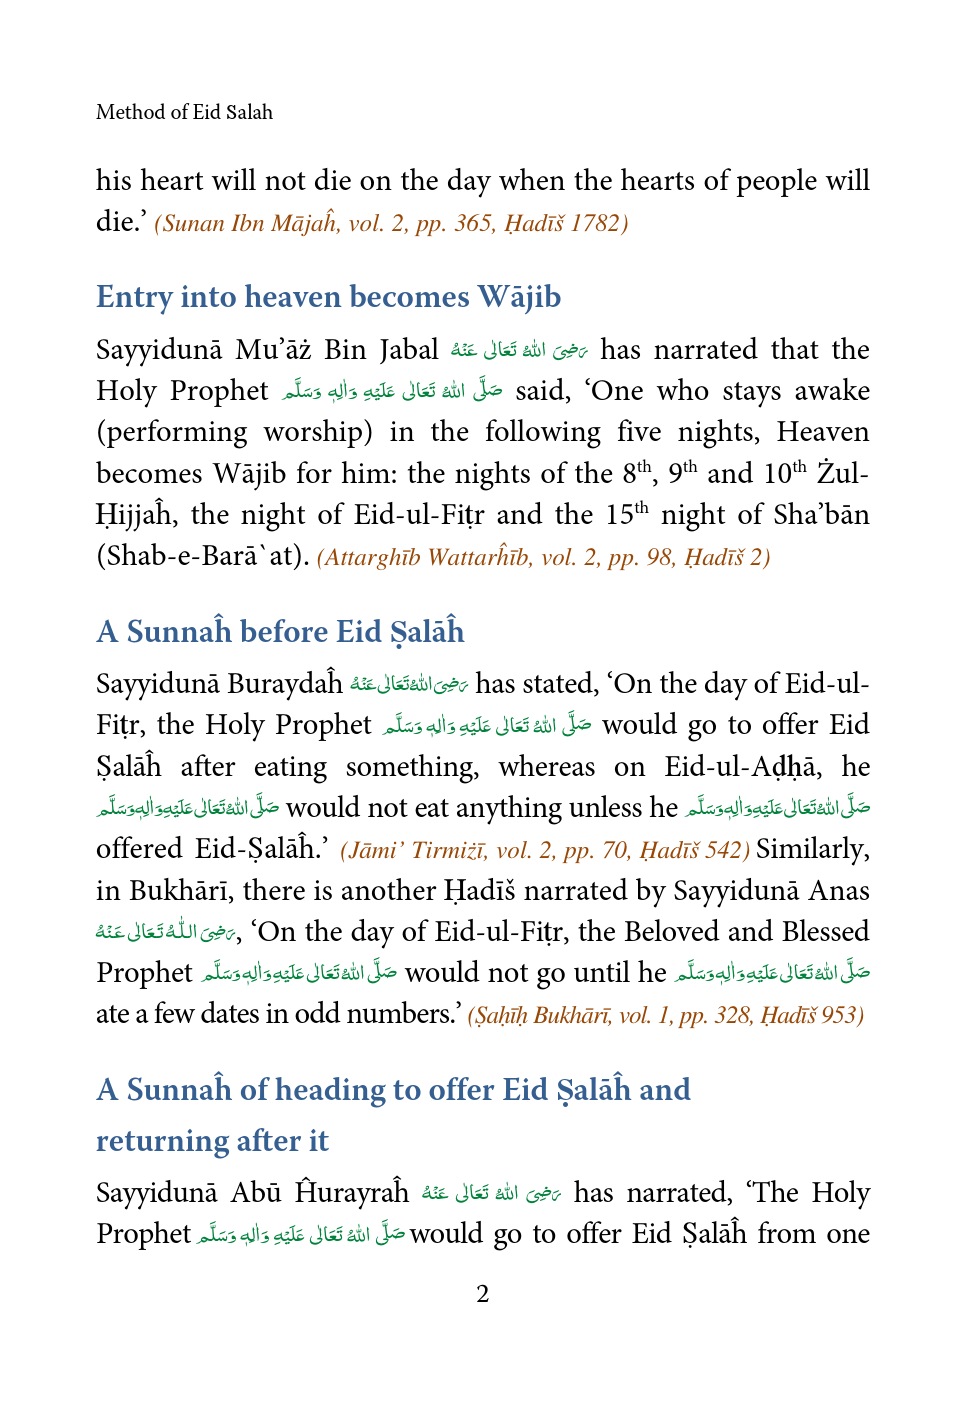 MethodOfEidSalahhanafi.pdf, 18- pages 